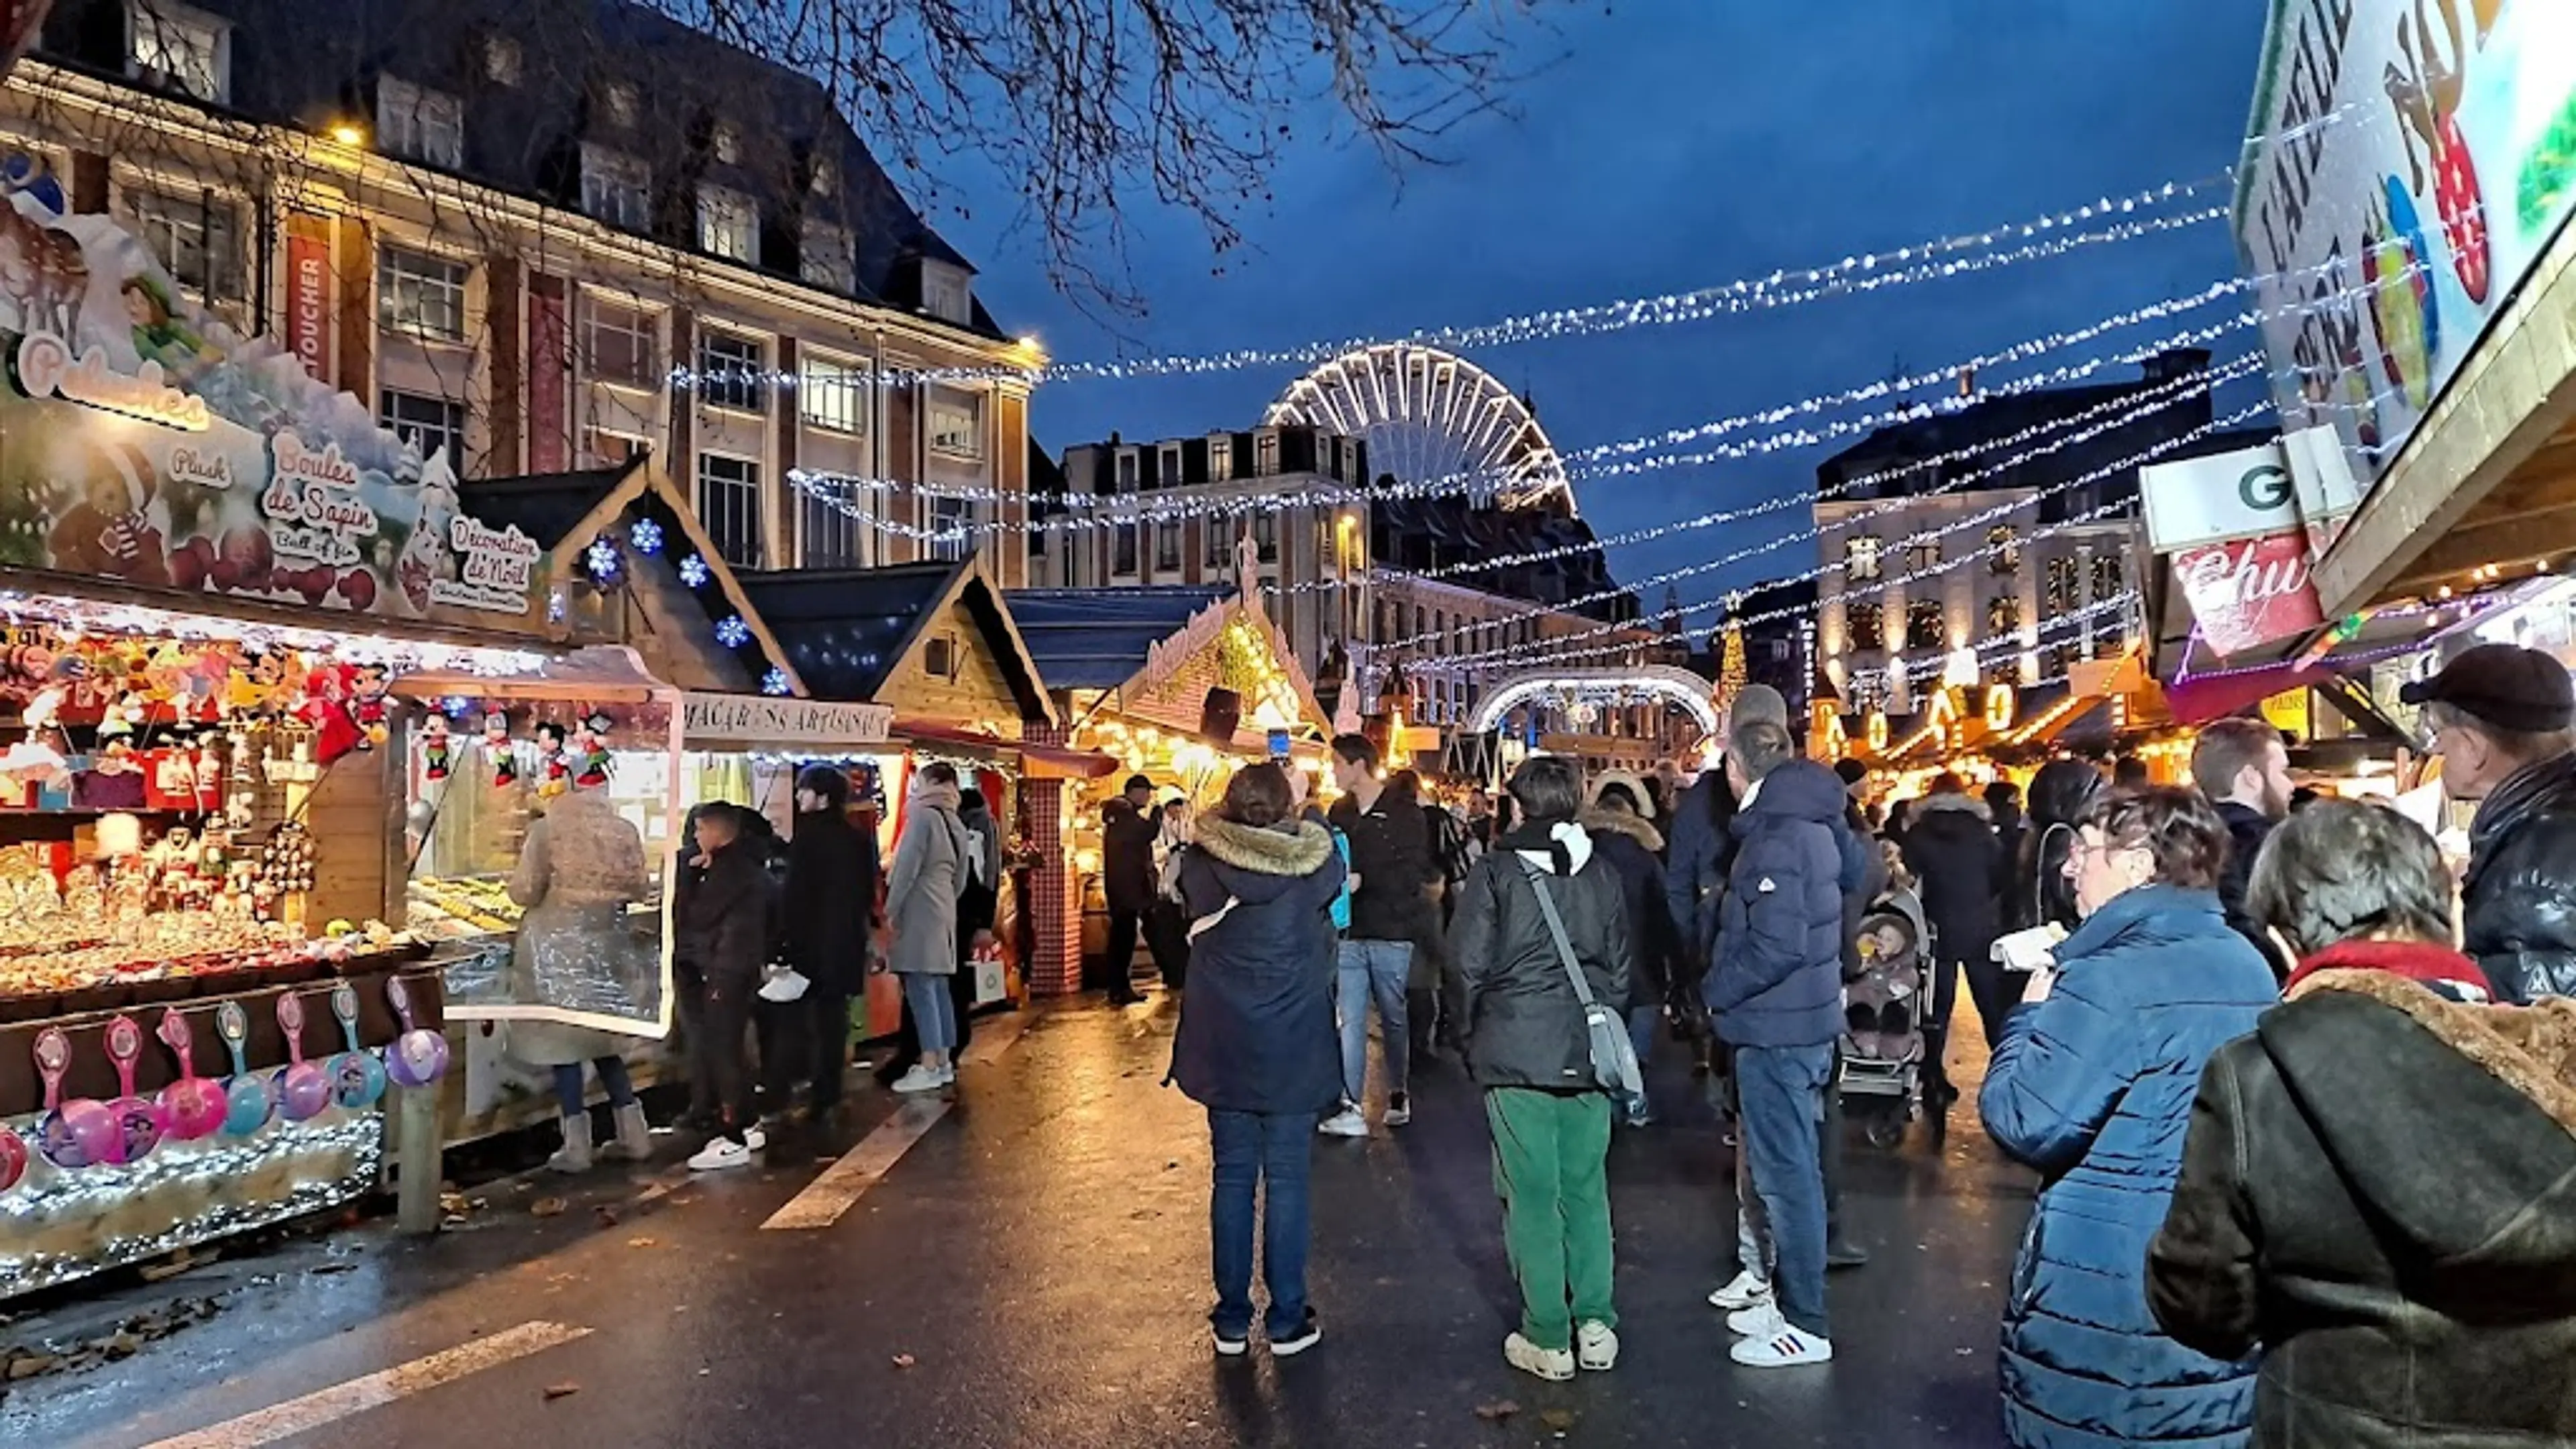 Lille Christmas Market